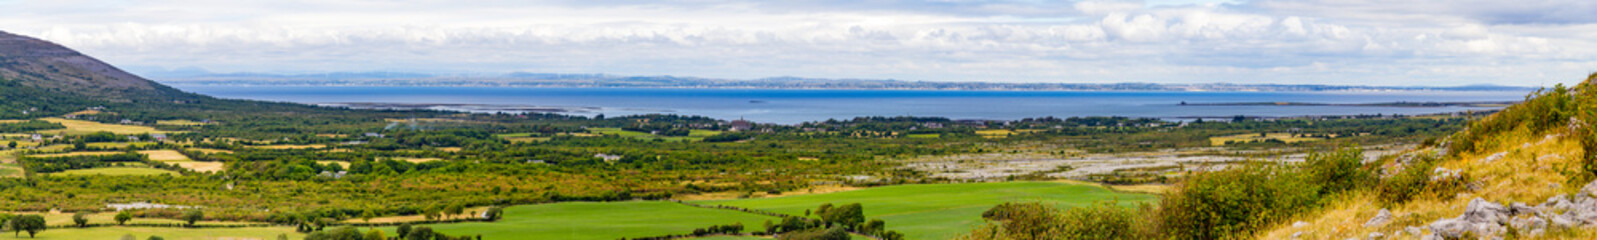 Fototapeta na wymiar Galway bay with Farm field, mountain and vegetation in Ballyvaughan